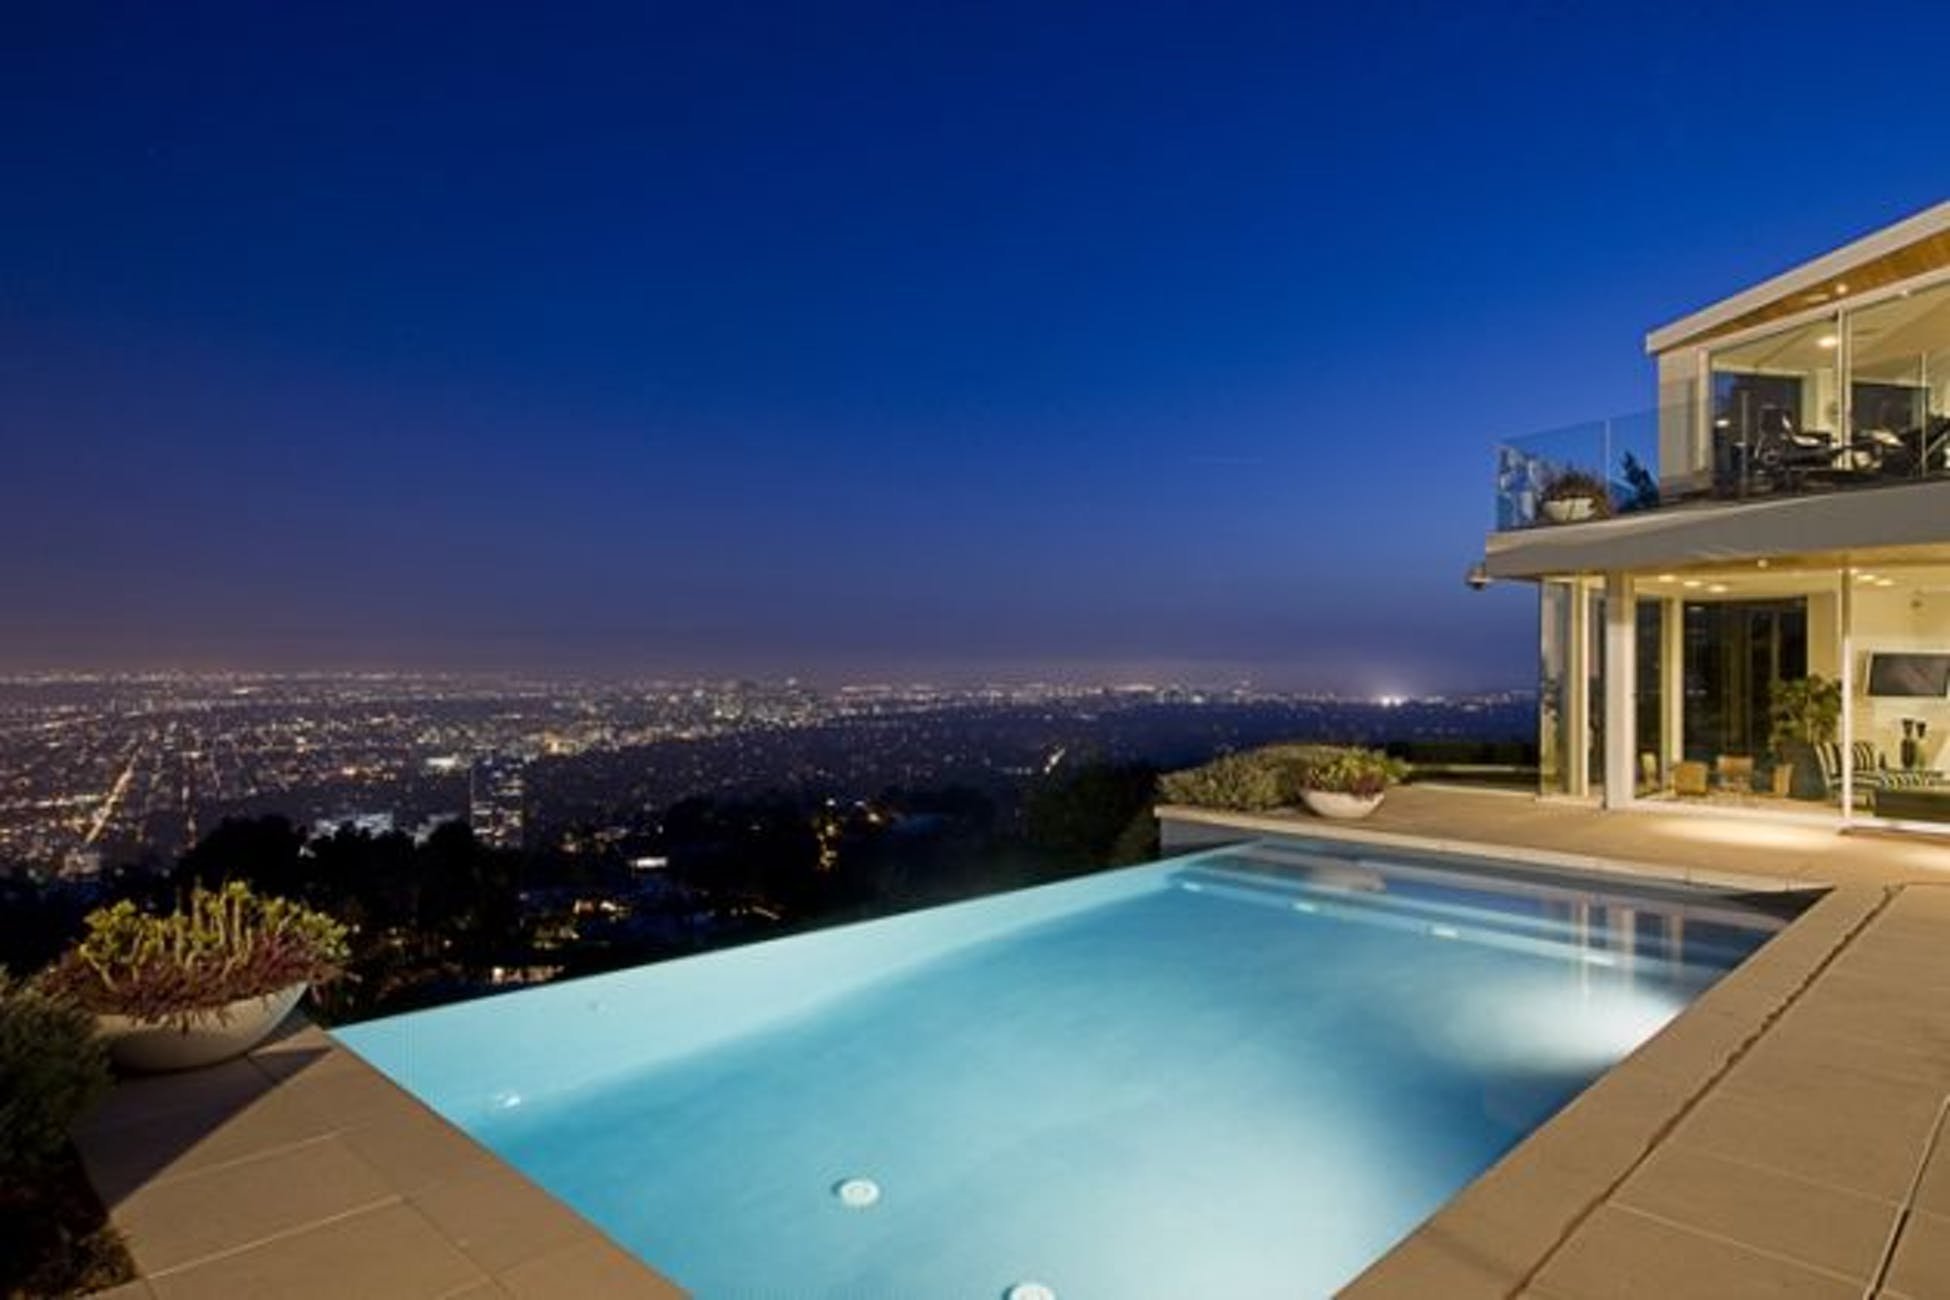 Luxury tech. Modern Mansion Лос Анджелес. Виллы на холмах в Лос Анджелесе. Особняк в Лос Анджелесе в Голливуде. Калифорния Лос Анджелес вилла.